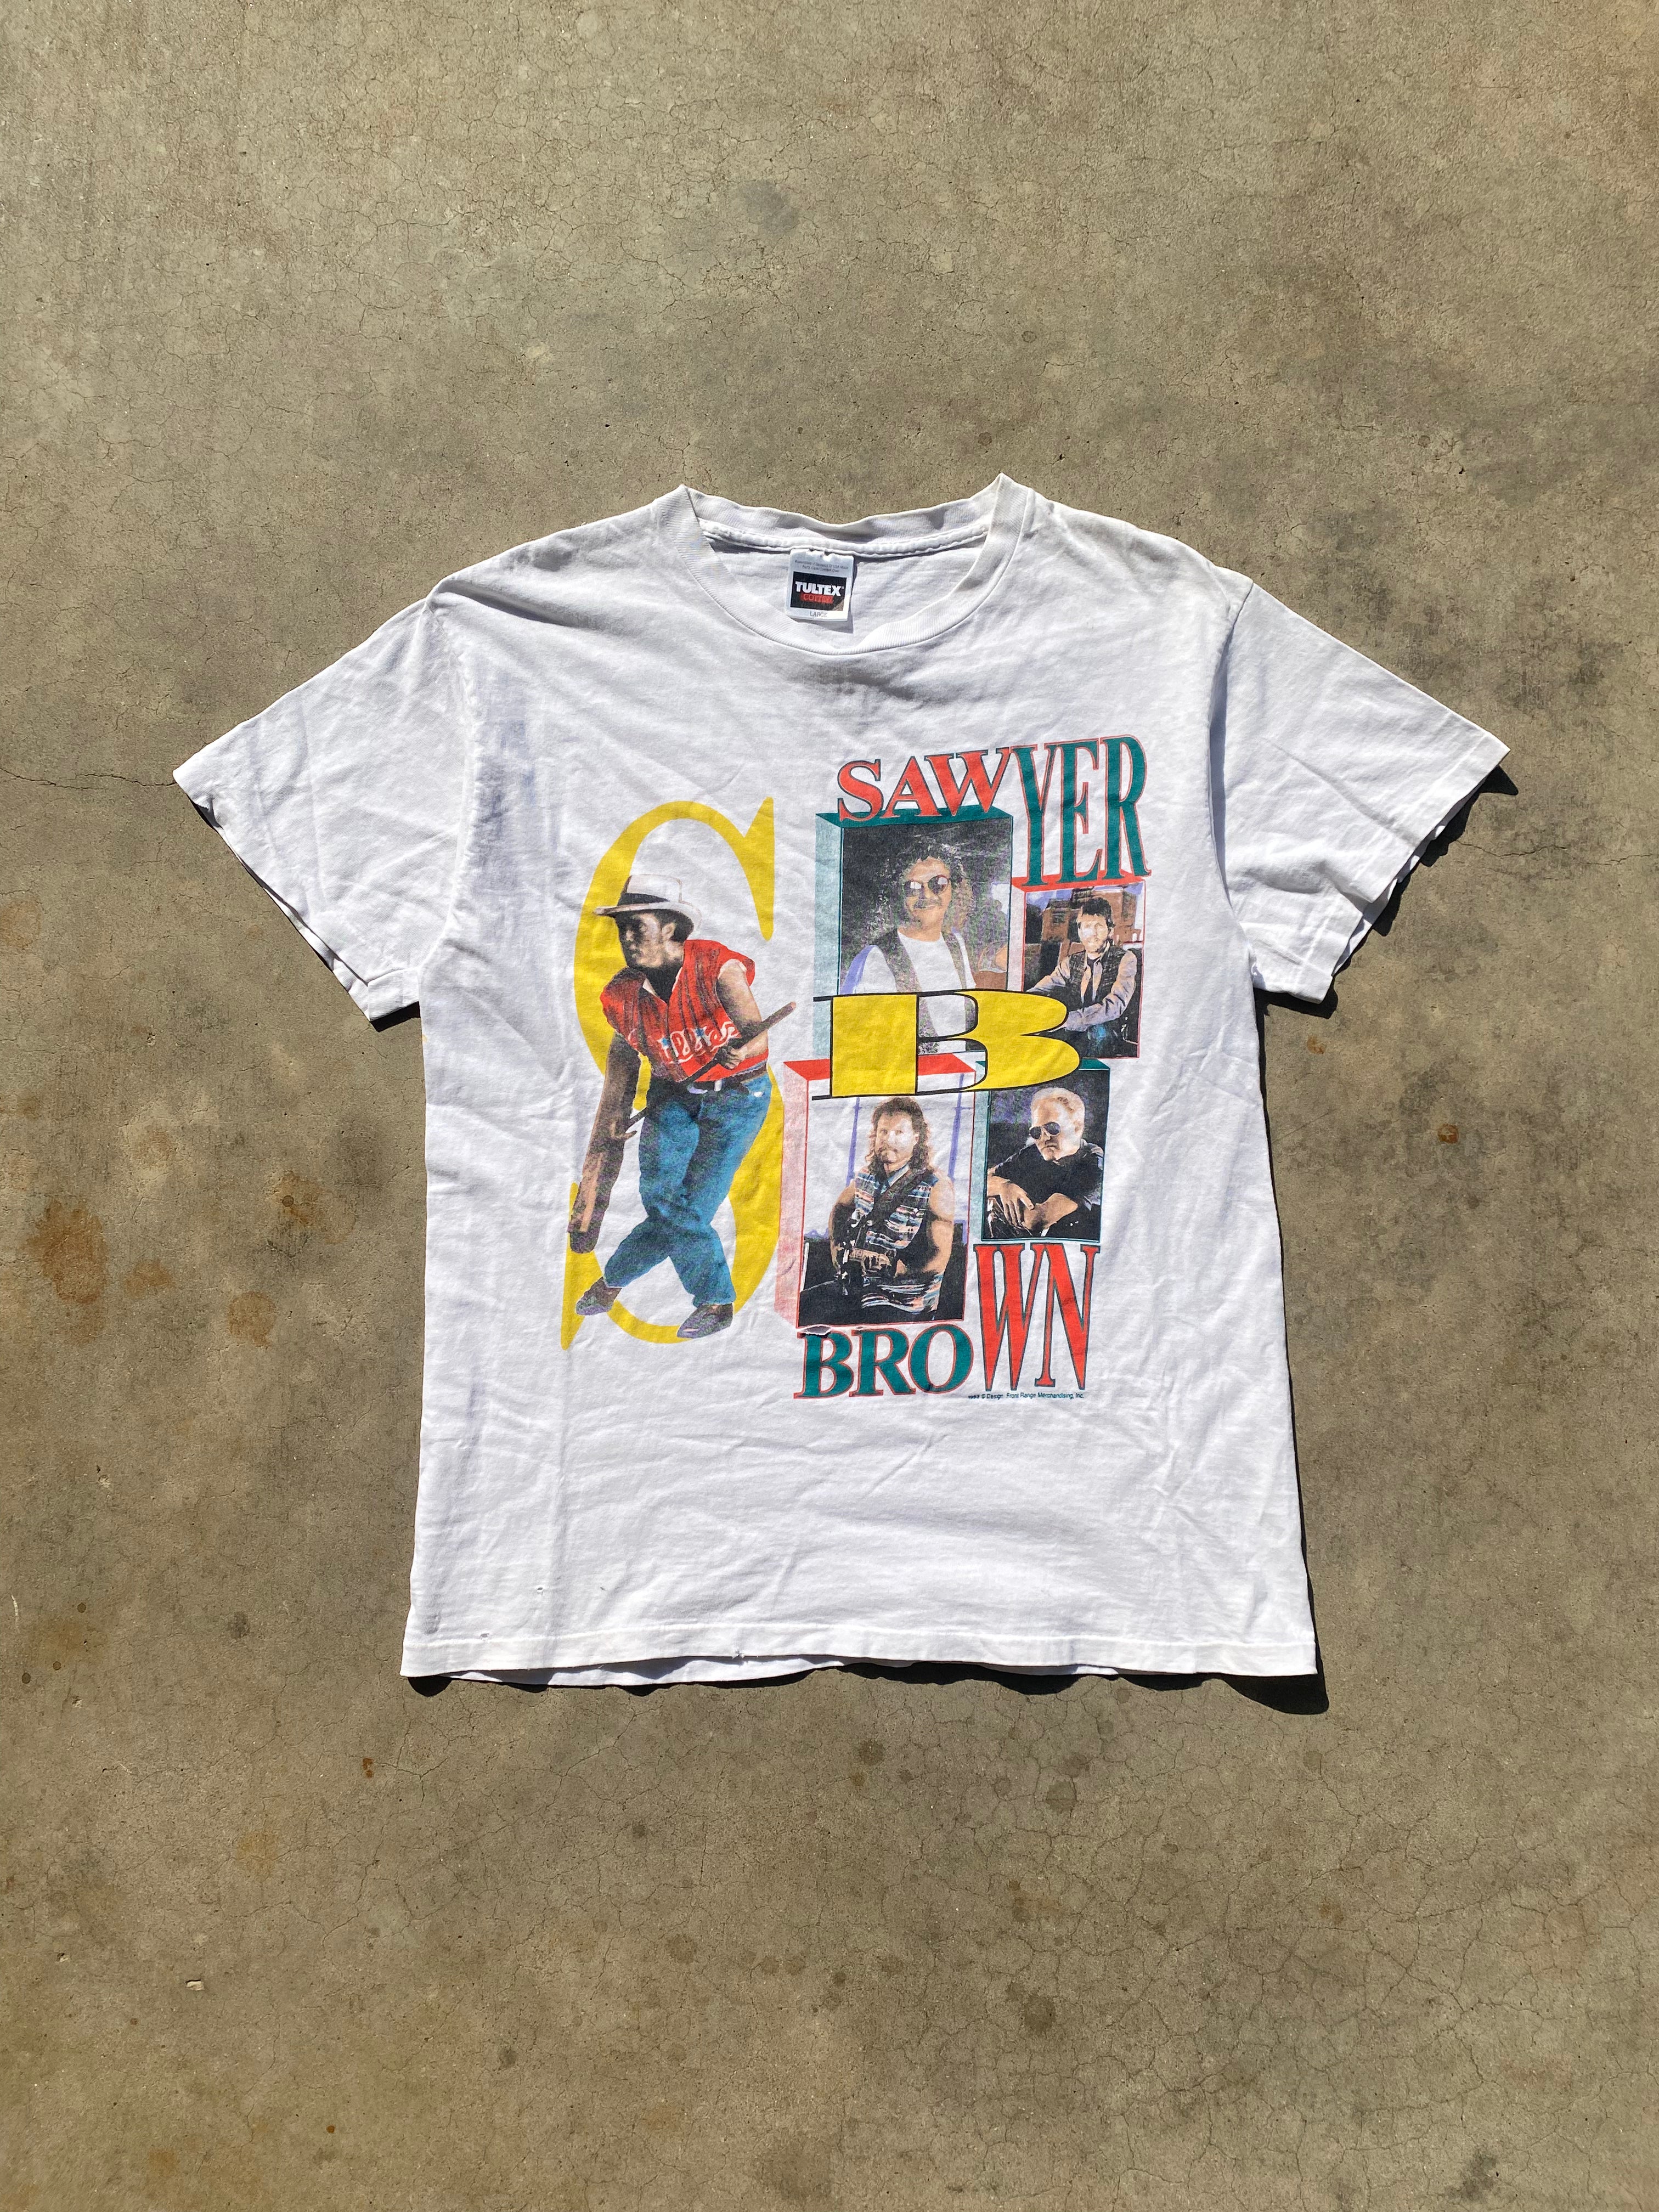 1993 Distressed Sawyer Brown Thank Mama Tour T-Shirt (M/L)